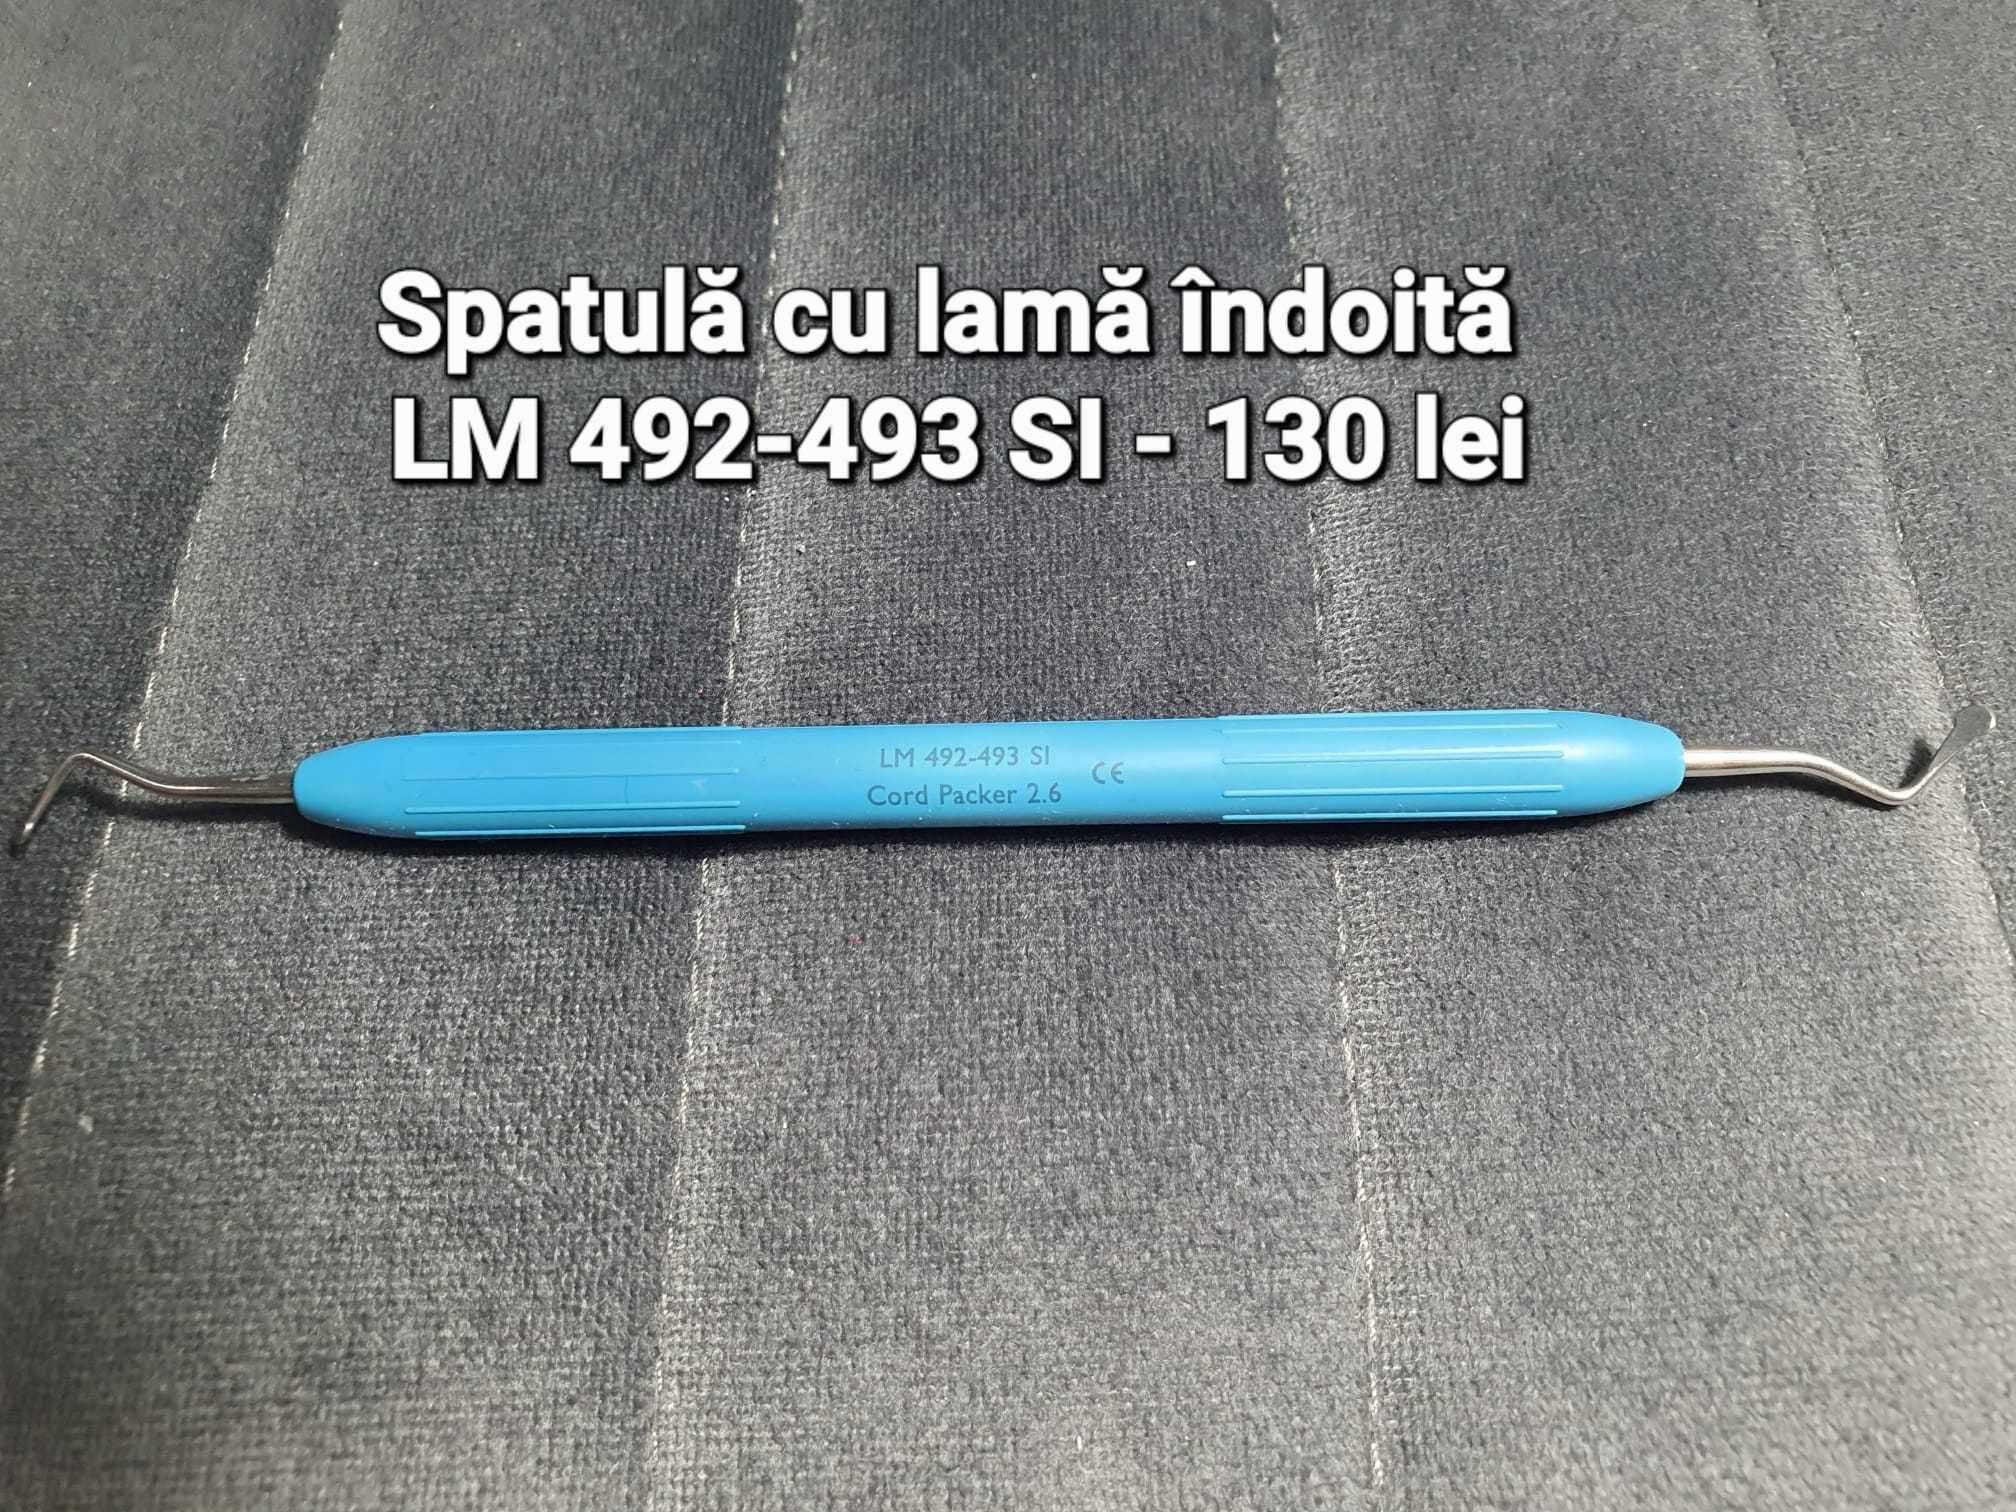 Spatula Cu lama Indoita LM492-493 Sl